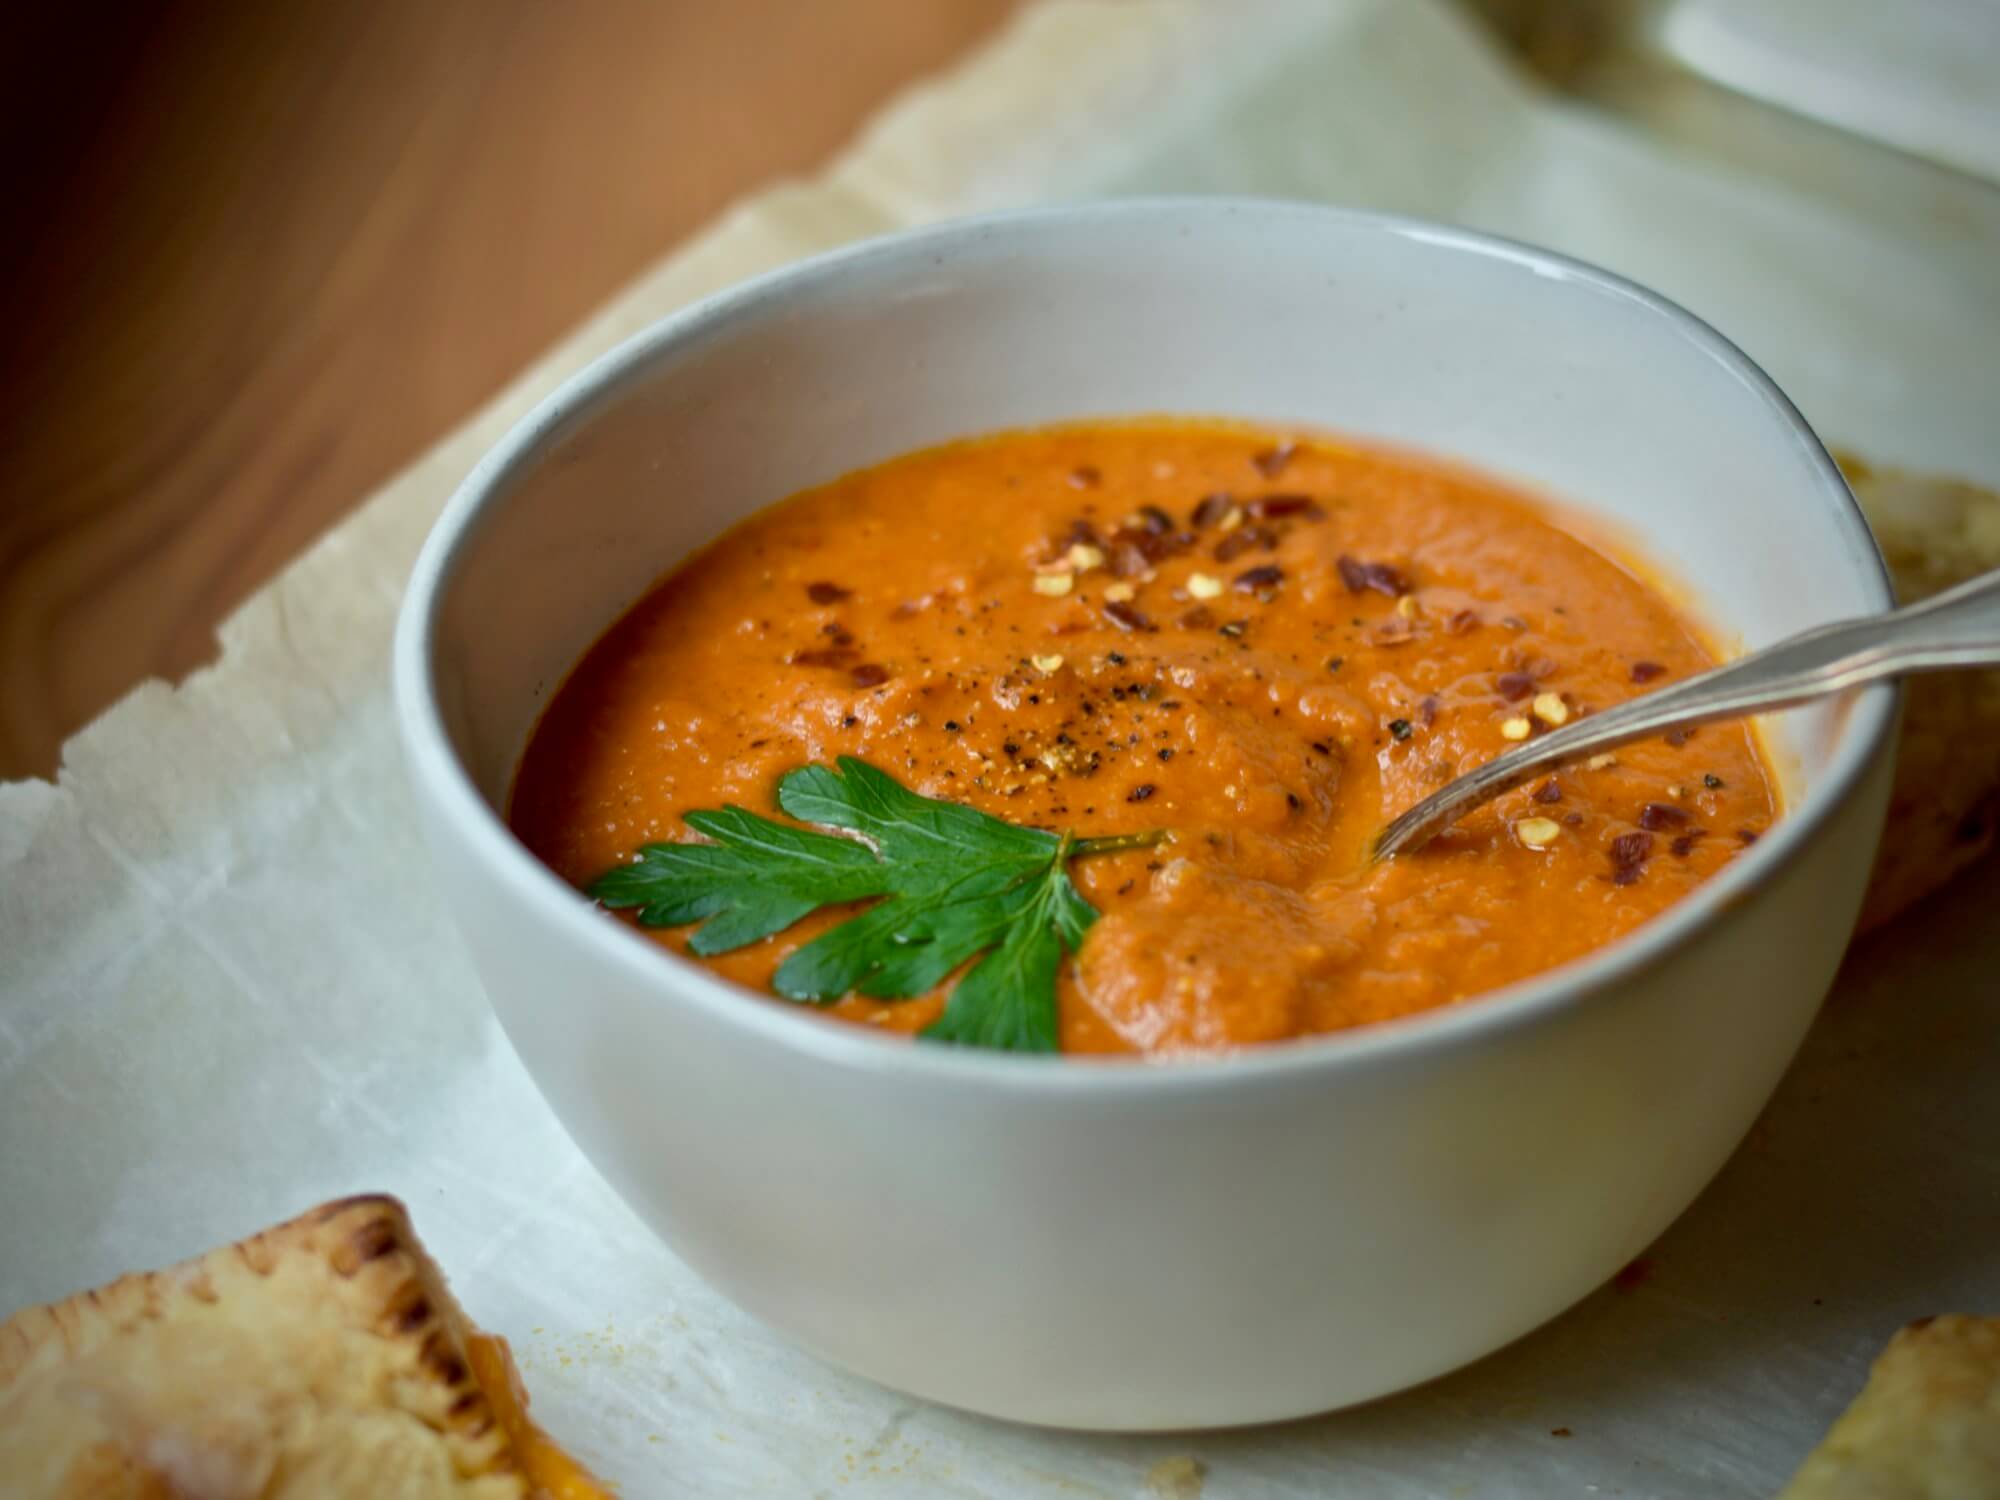 Spiced cream of tomato soup